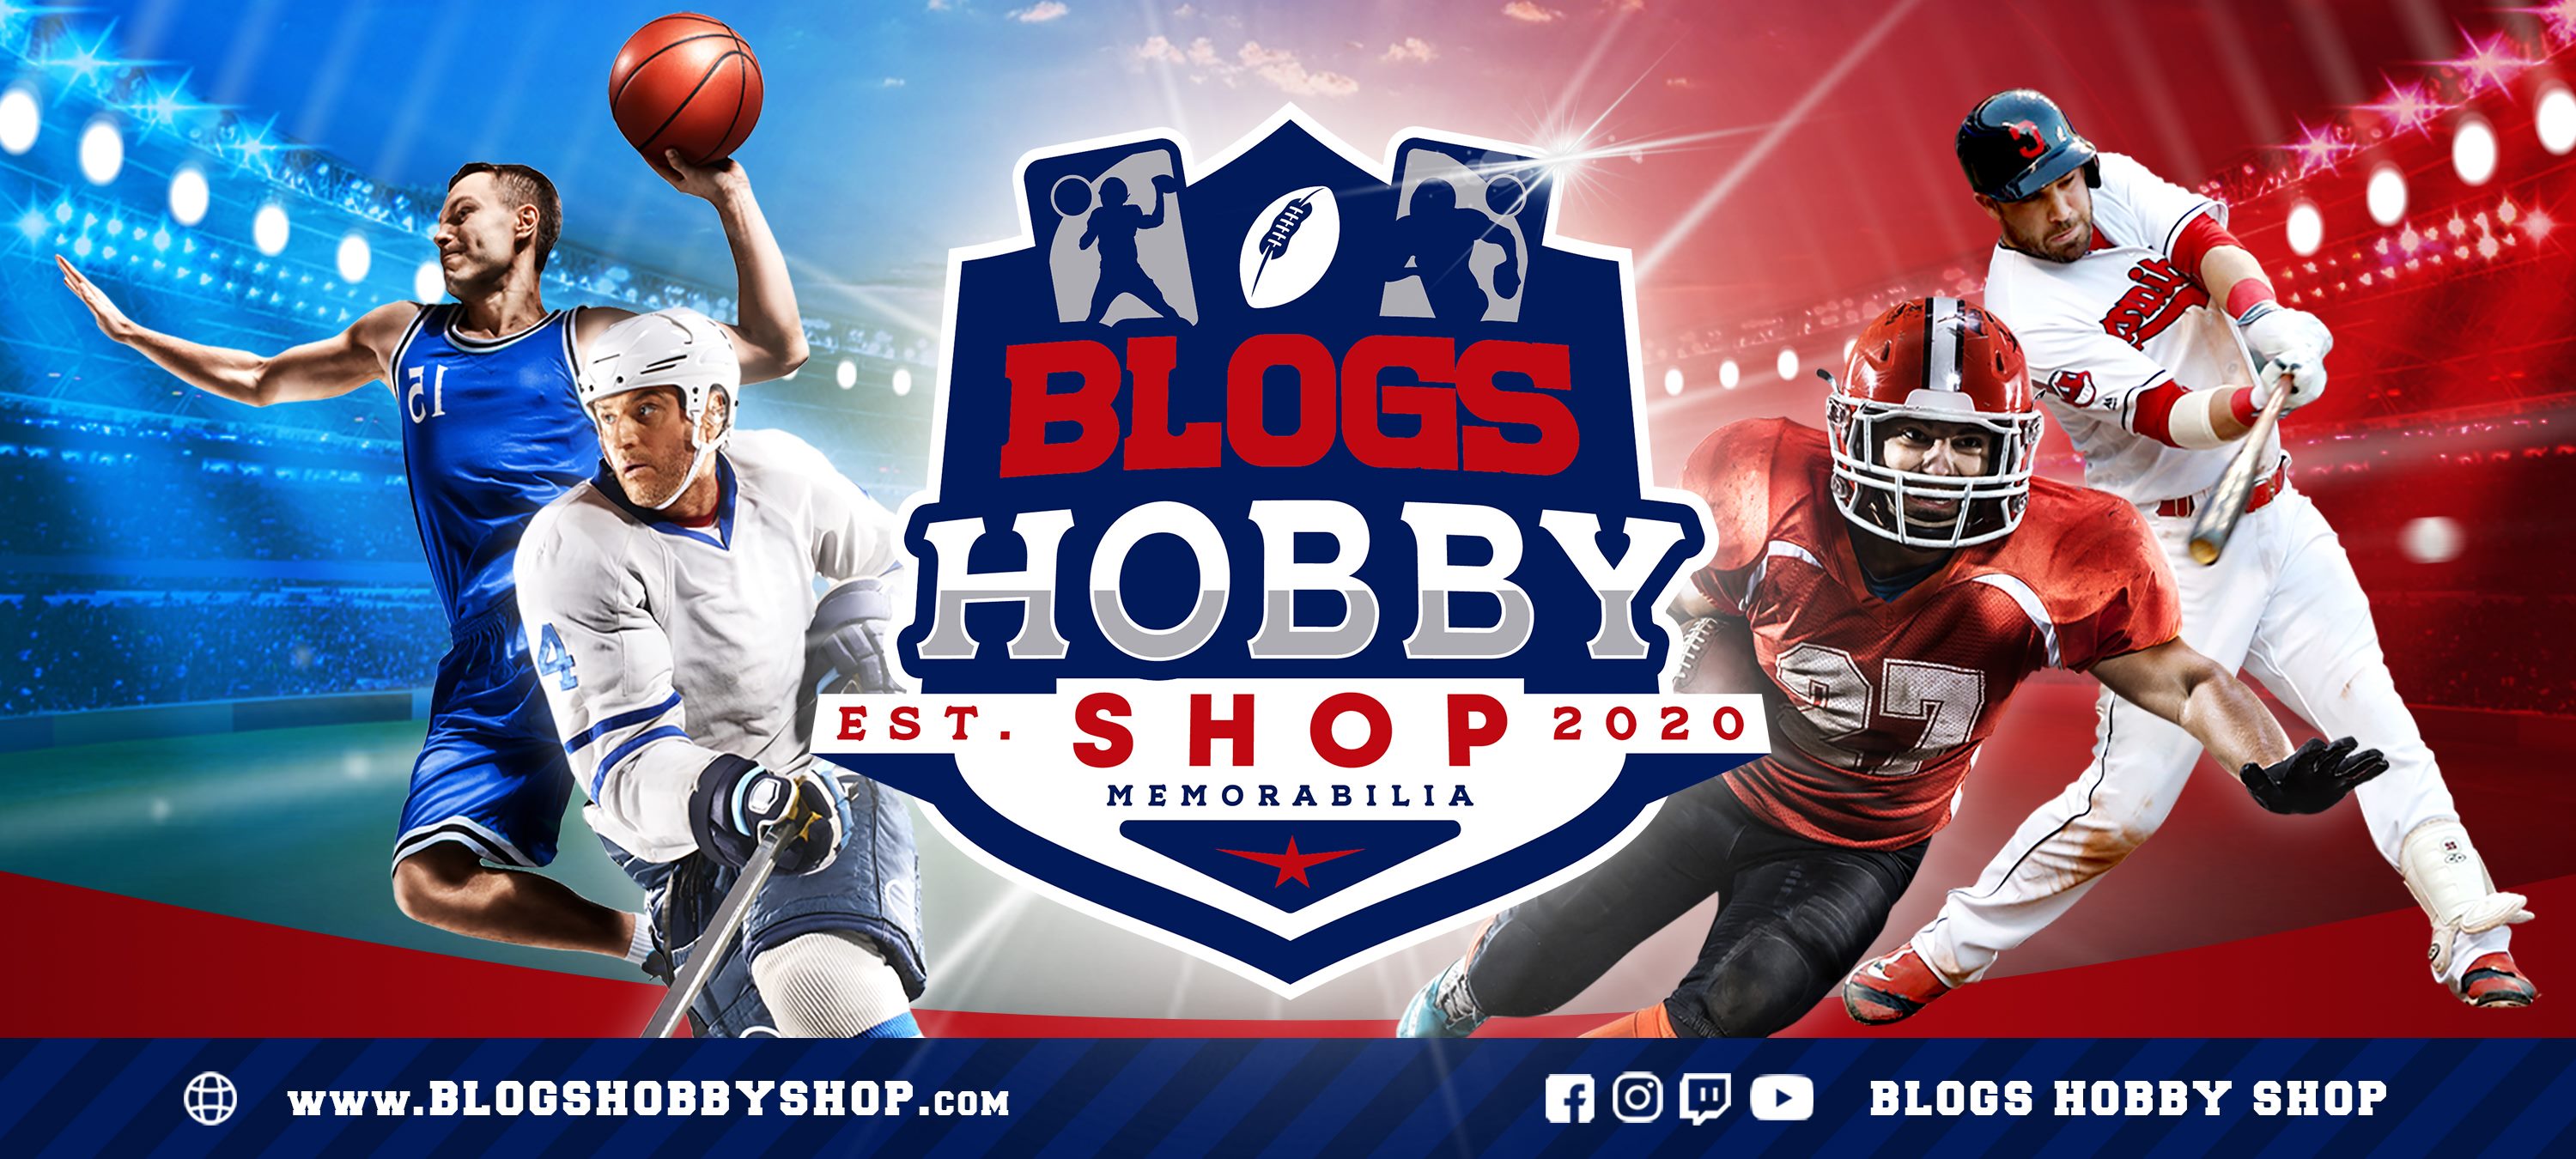 Blogs Hobby Shop